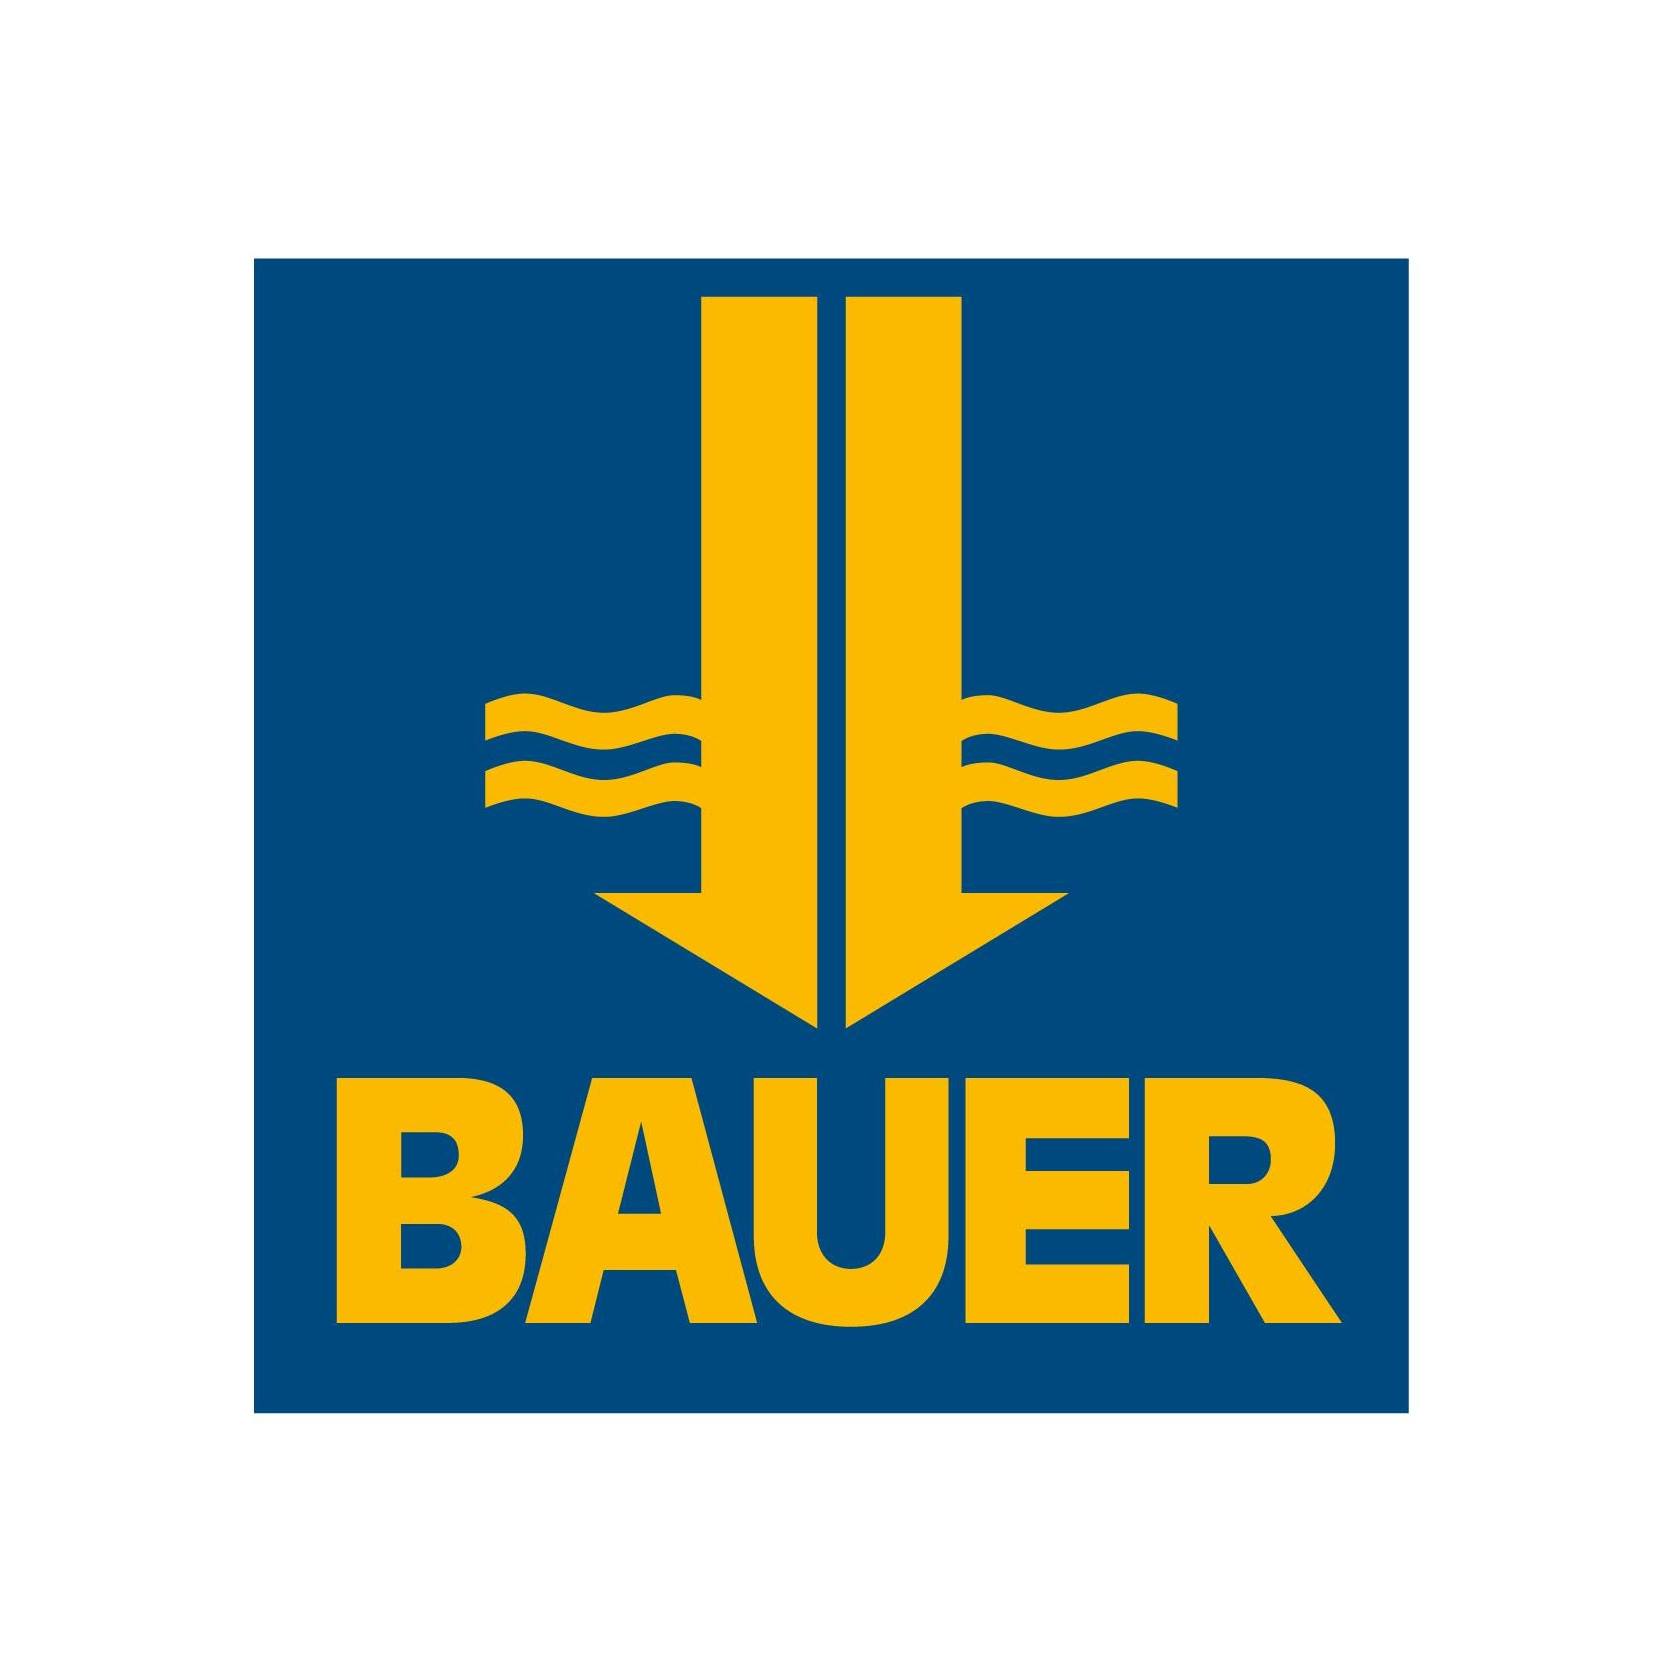 BAUER Spezialtiefbau GmbH - logo